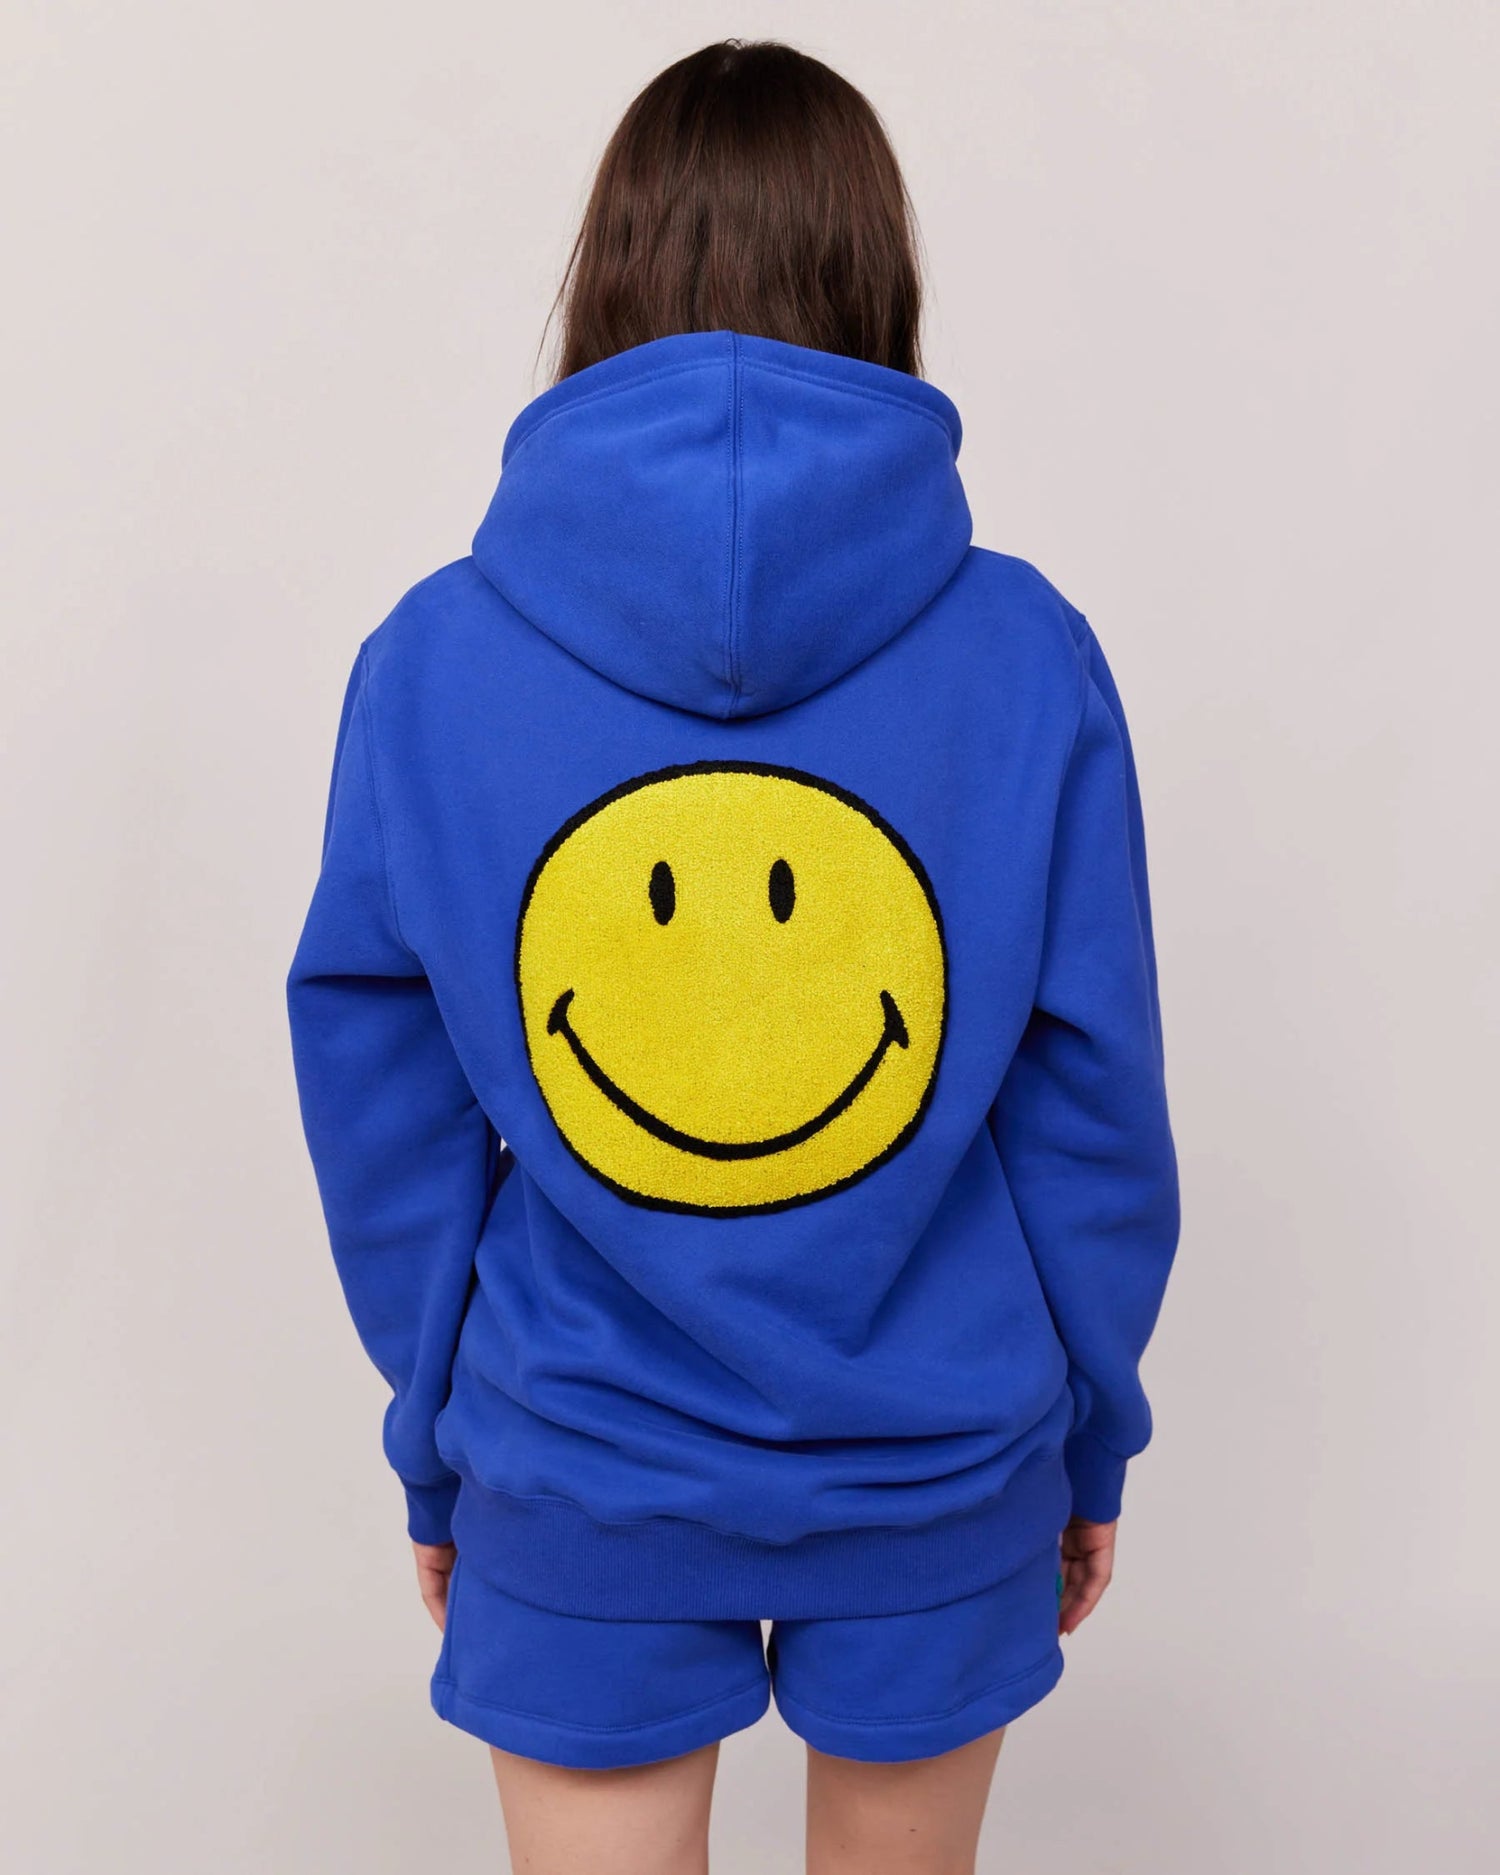 Shop Samii Ryan x Smiley® Chenille Hooded Sweater - Premium Hoodie from Samii Ryan Online now at Spoiled Brat 